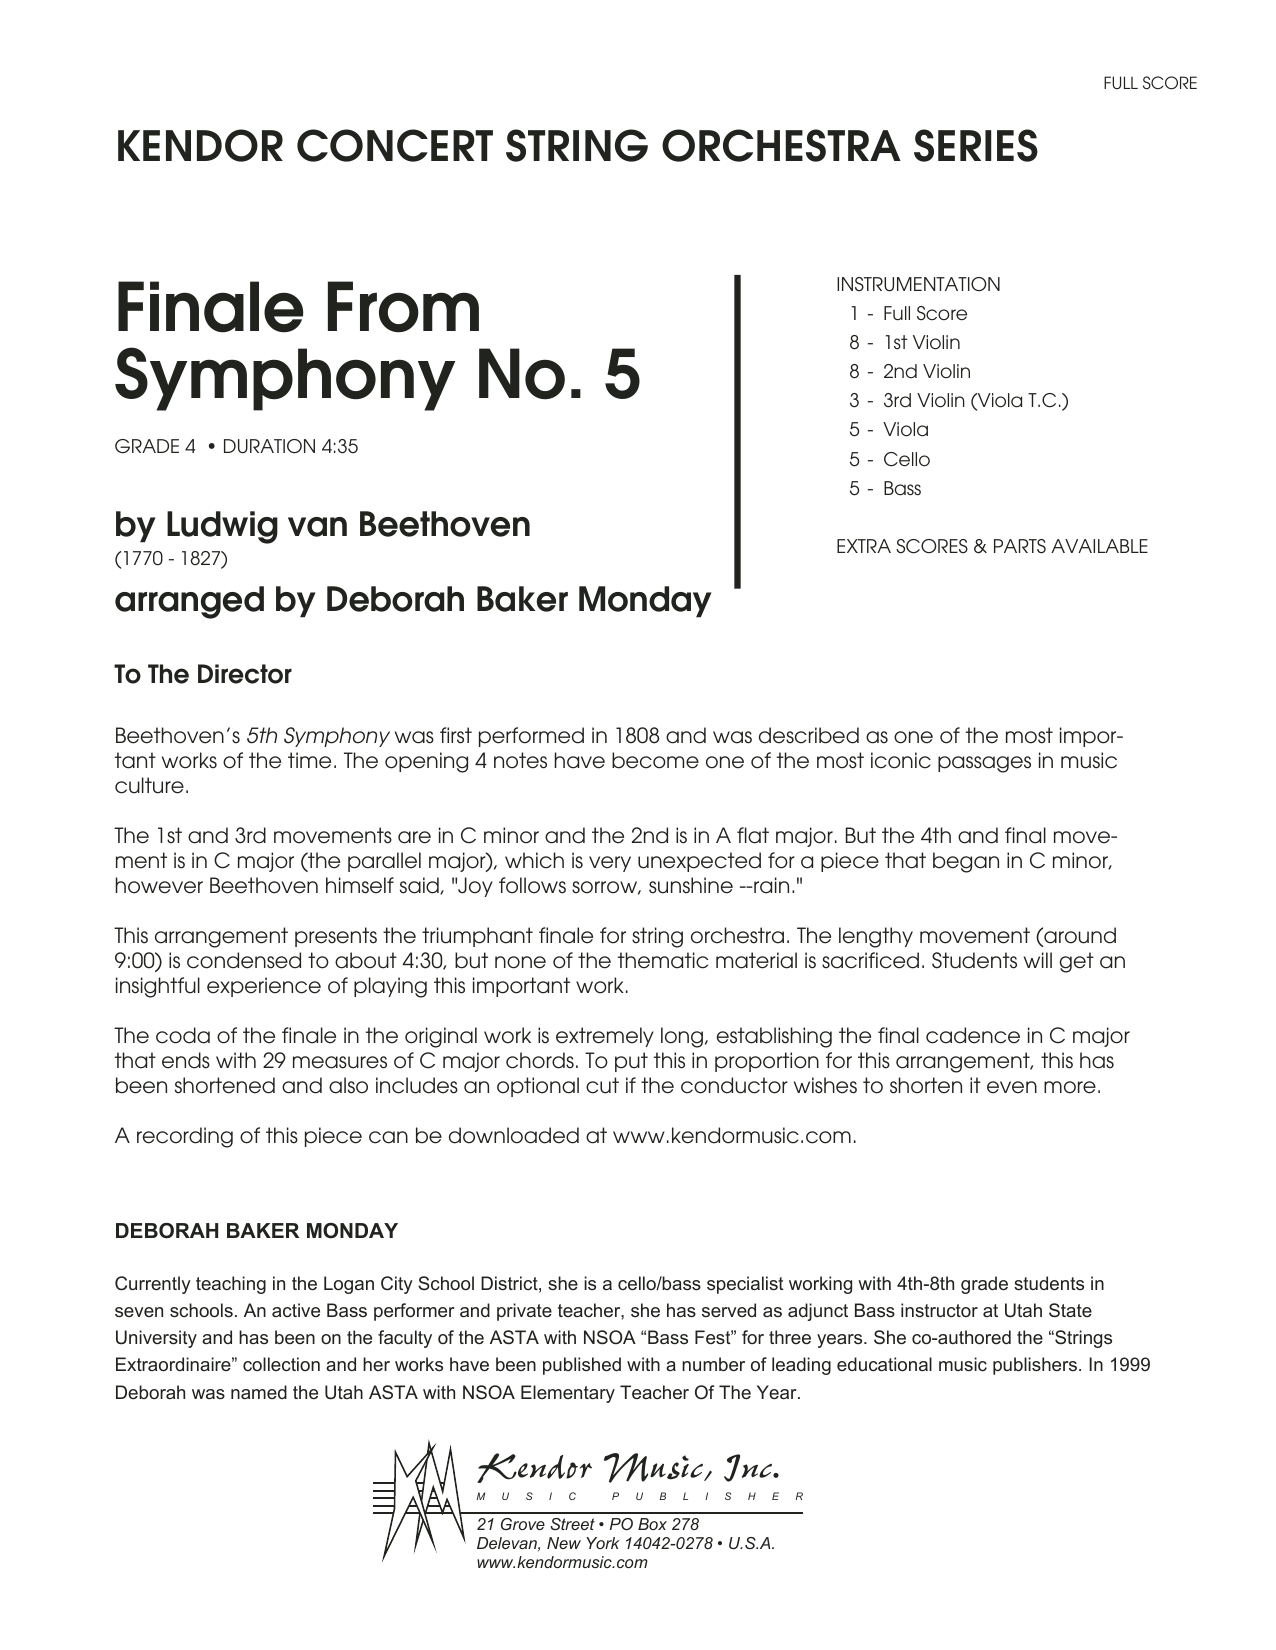 Download Deborah Baker Monday Finale from Symphony No. 5 - Full Score Sheet Music